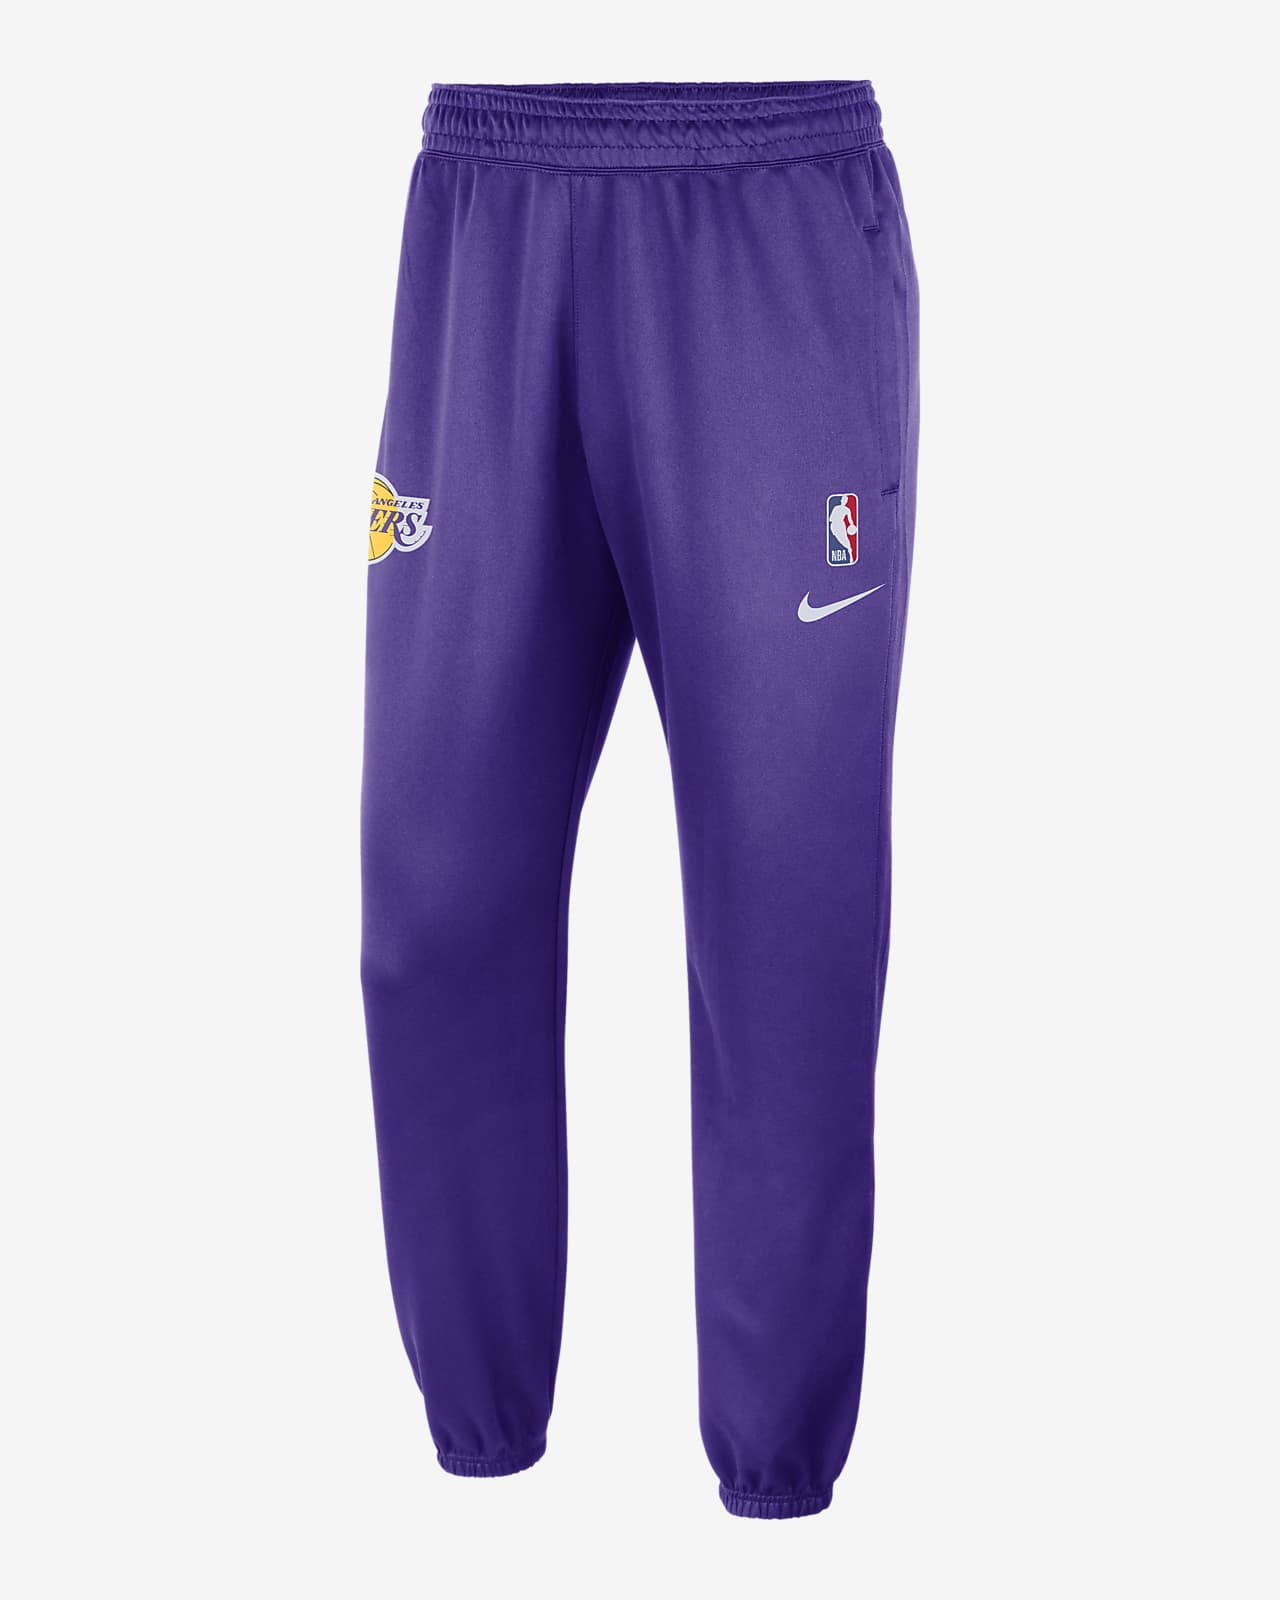 Los Lakers Spotlight Men's Nike Dri-FIT Trousers. Nike